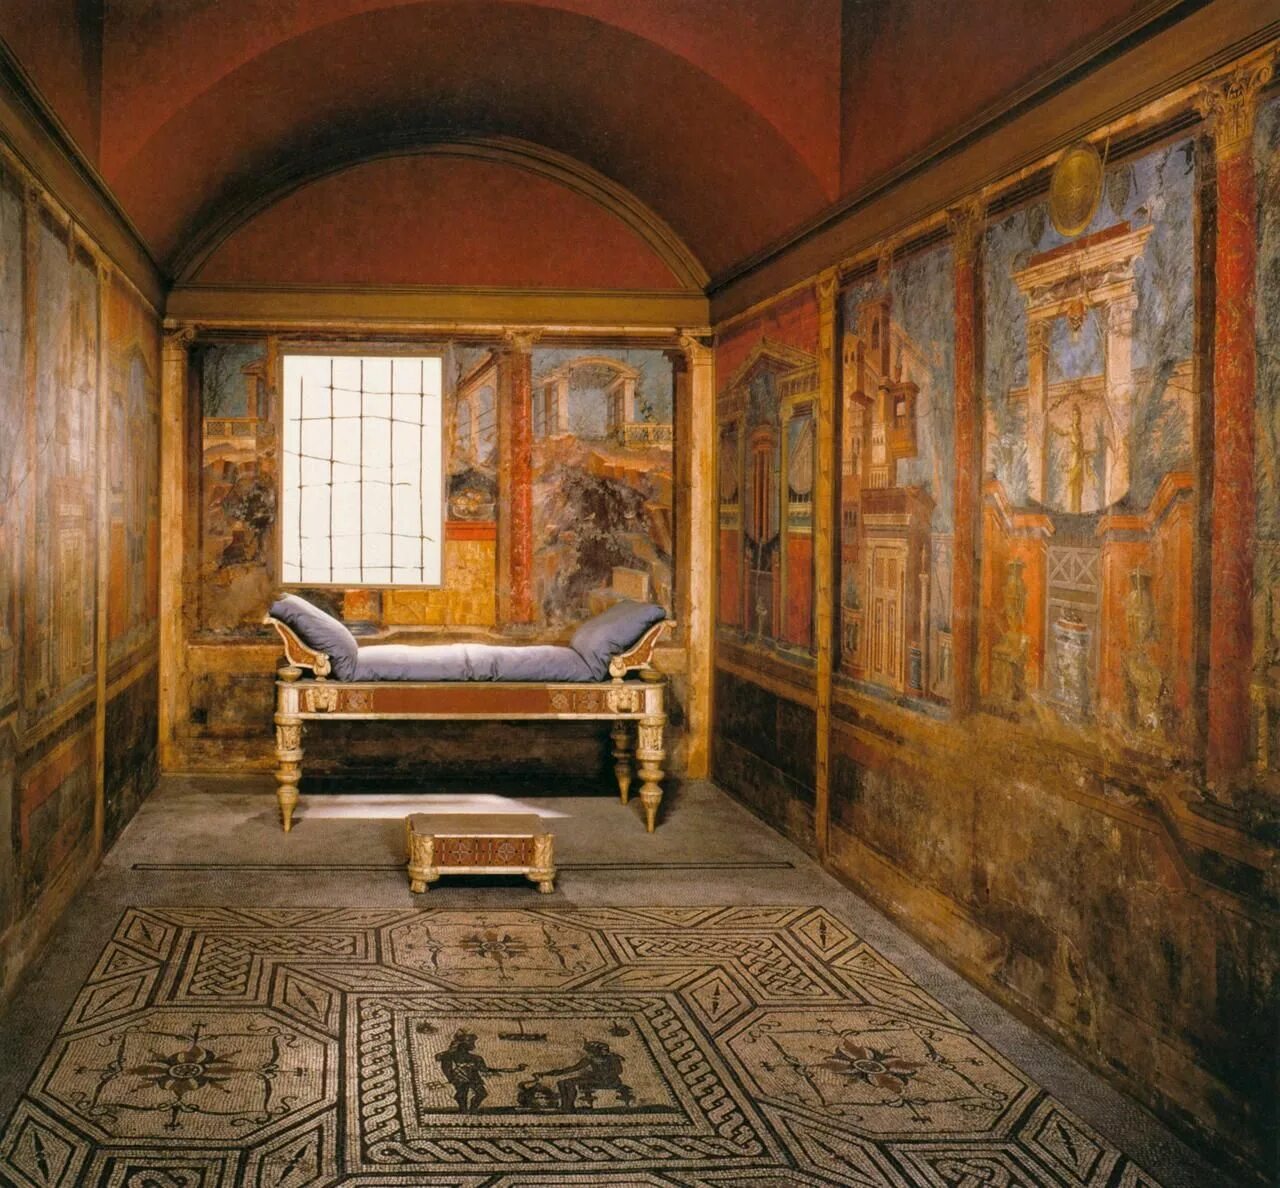 Комната древностей. Вилла в Боскореале древний Рим. Вилла Боскореале фрески. Философ фреска вилла в Боскореале 1 век. Вилла в Боскореале фрески 3 помпейский стиль.